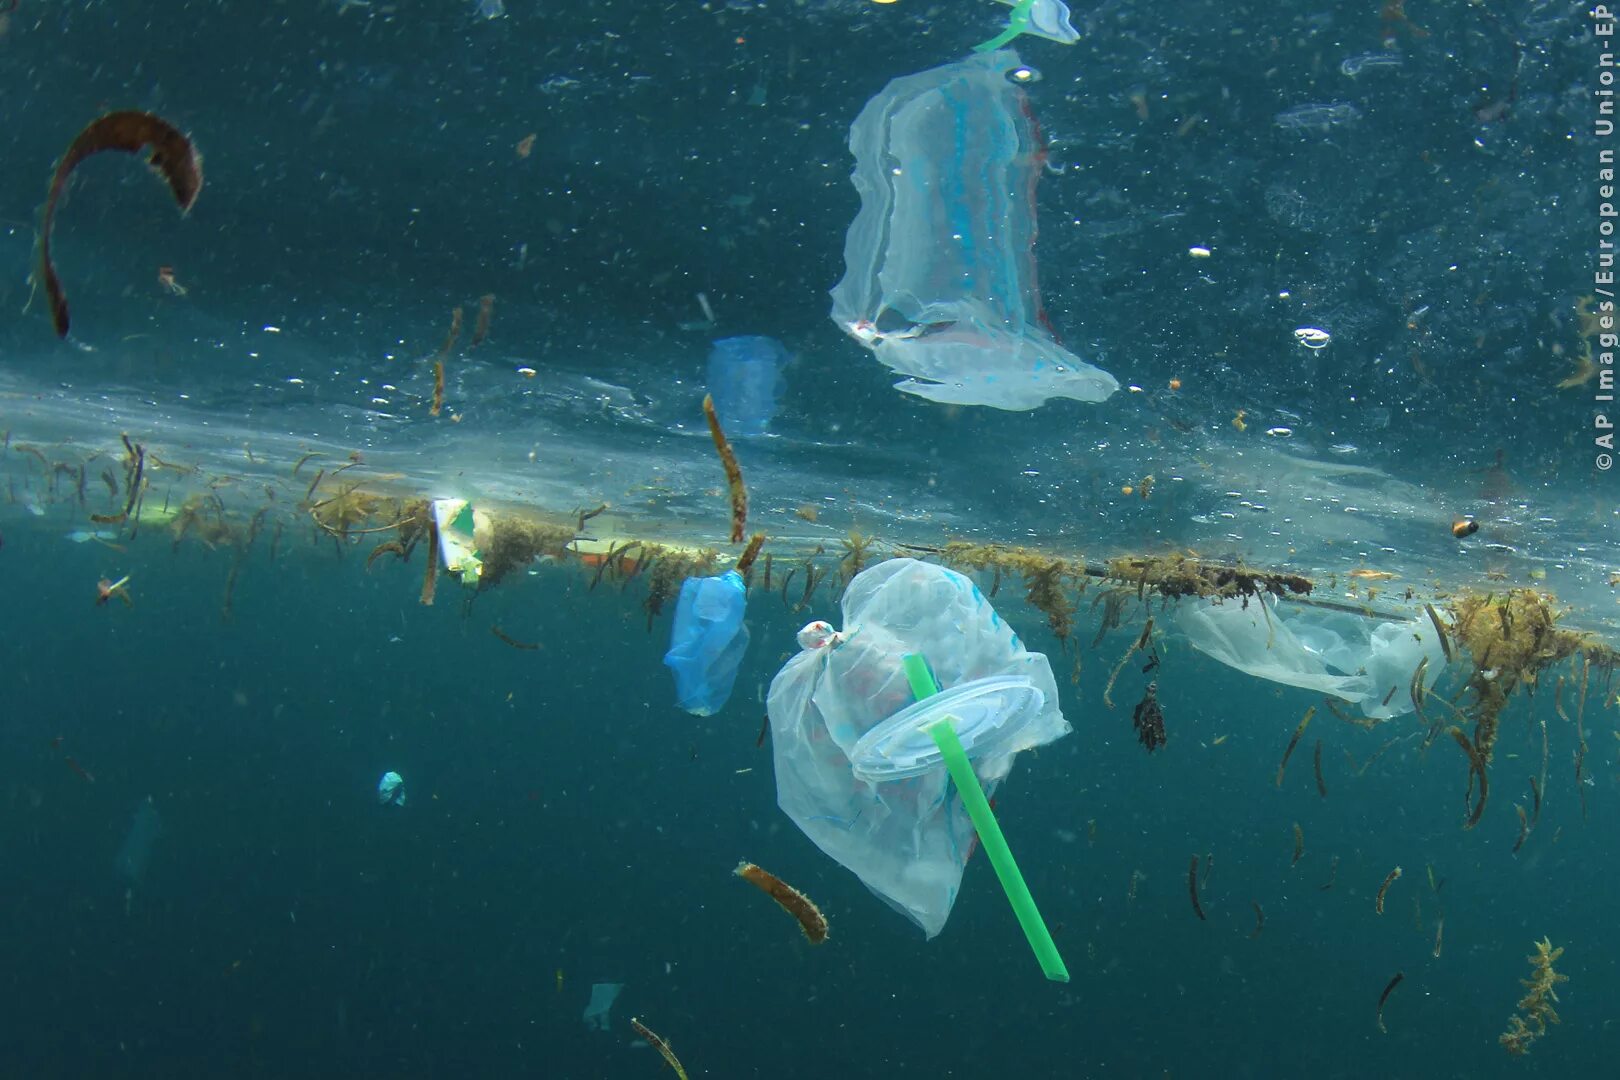 На дне воздушного океана. Пластик в океане. Пластик в мировом океане. Пластиковые трубочки в океане. Экология морей и океанов.